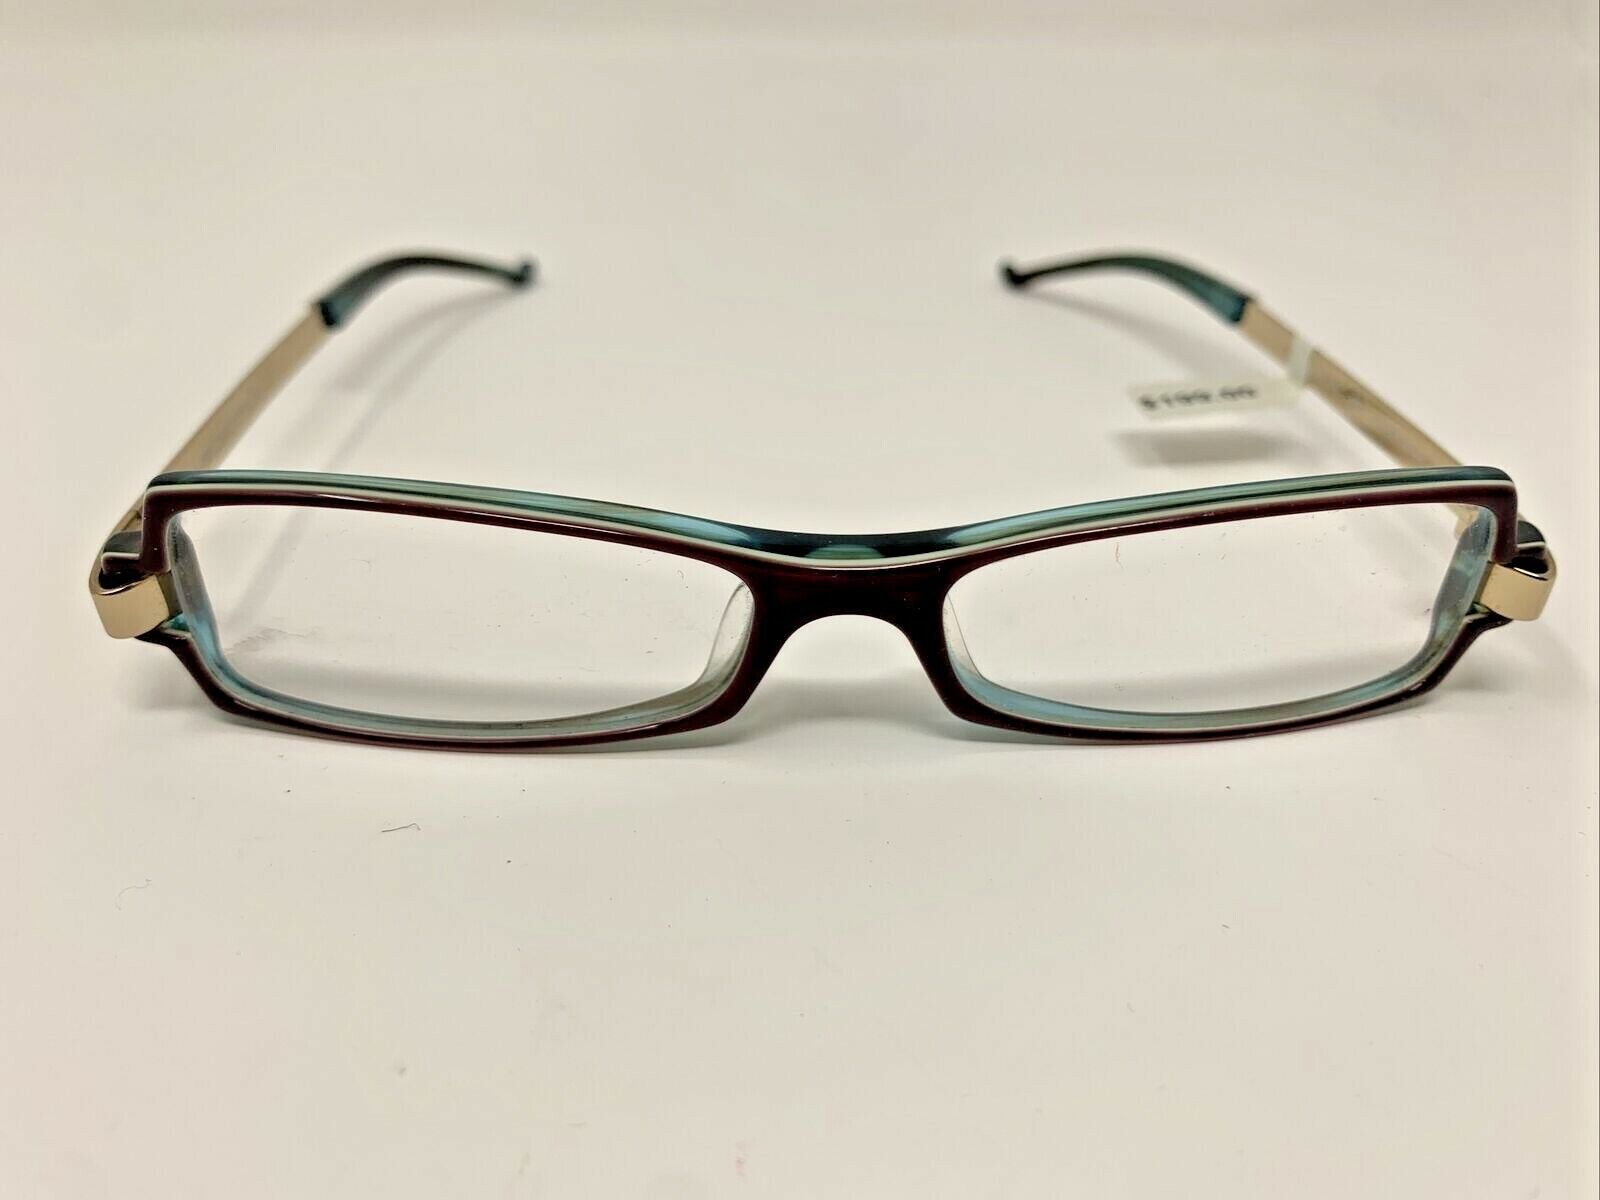 Neostyle Eyeglasses Frames 345 058 50-15/16-130 Purple Full Rim Metal AL73 3 miejsce ogólnie